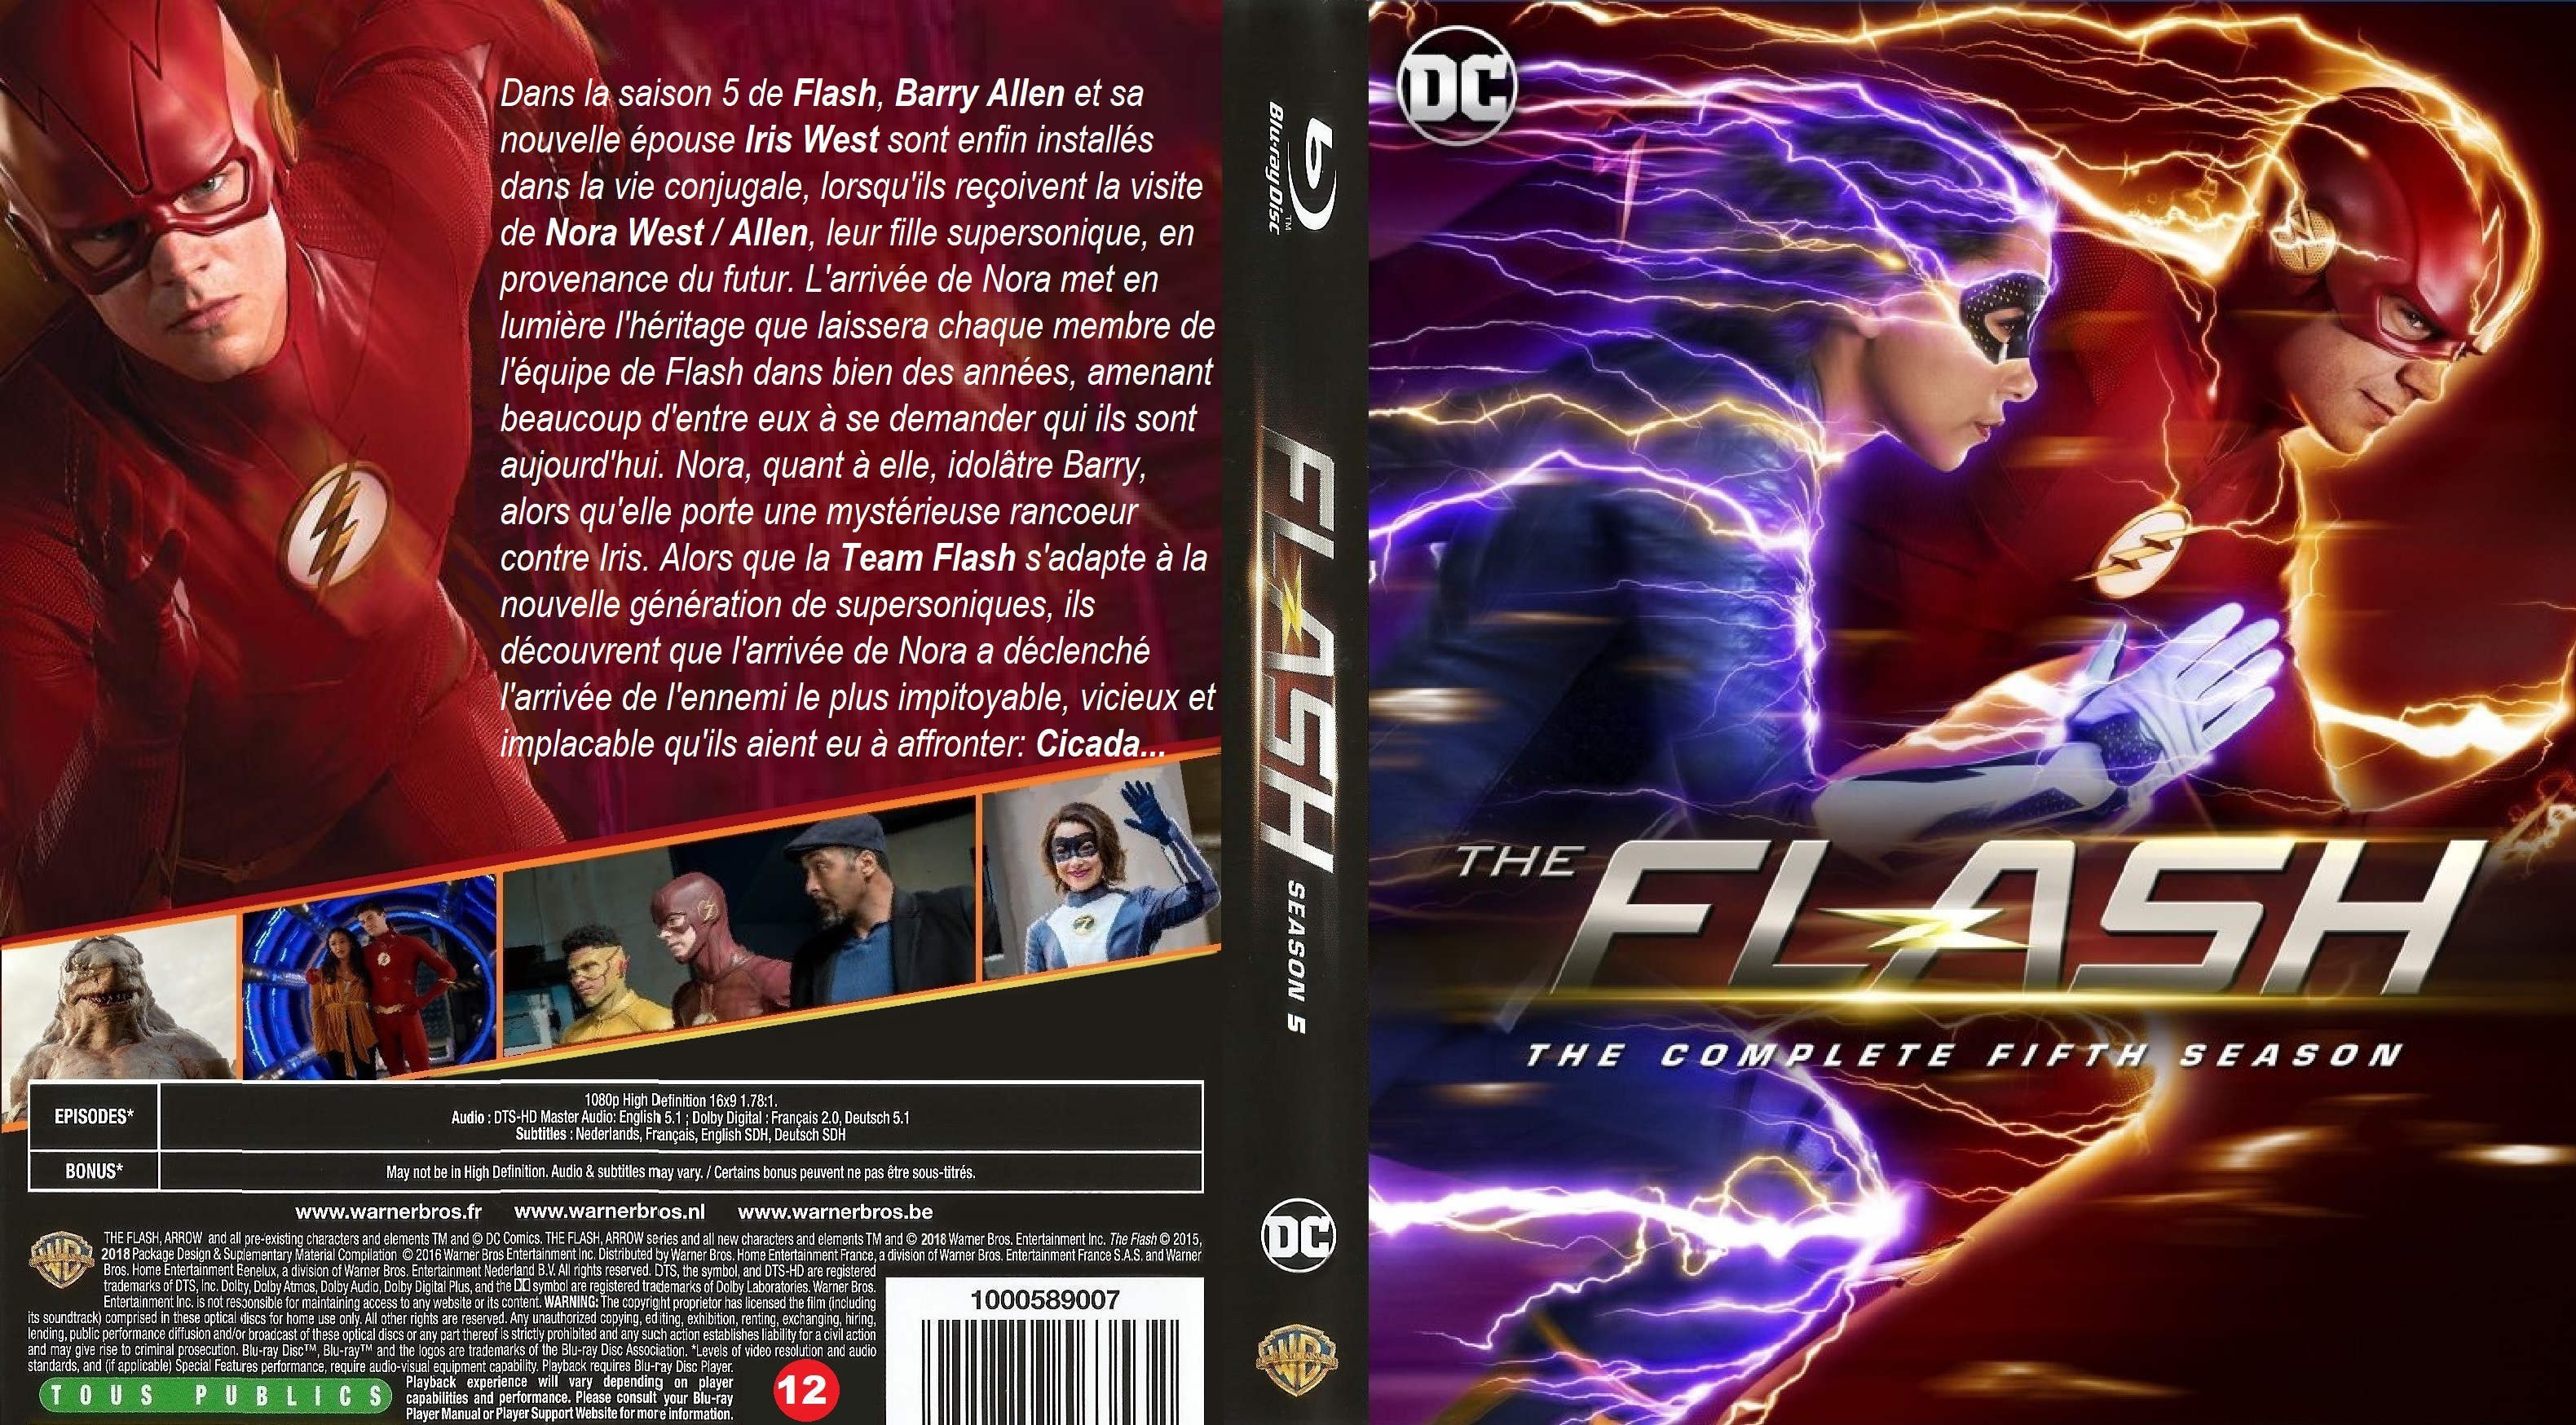 Jaquette DVD Flash saison 5 custom (BLU-RAY) v2